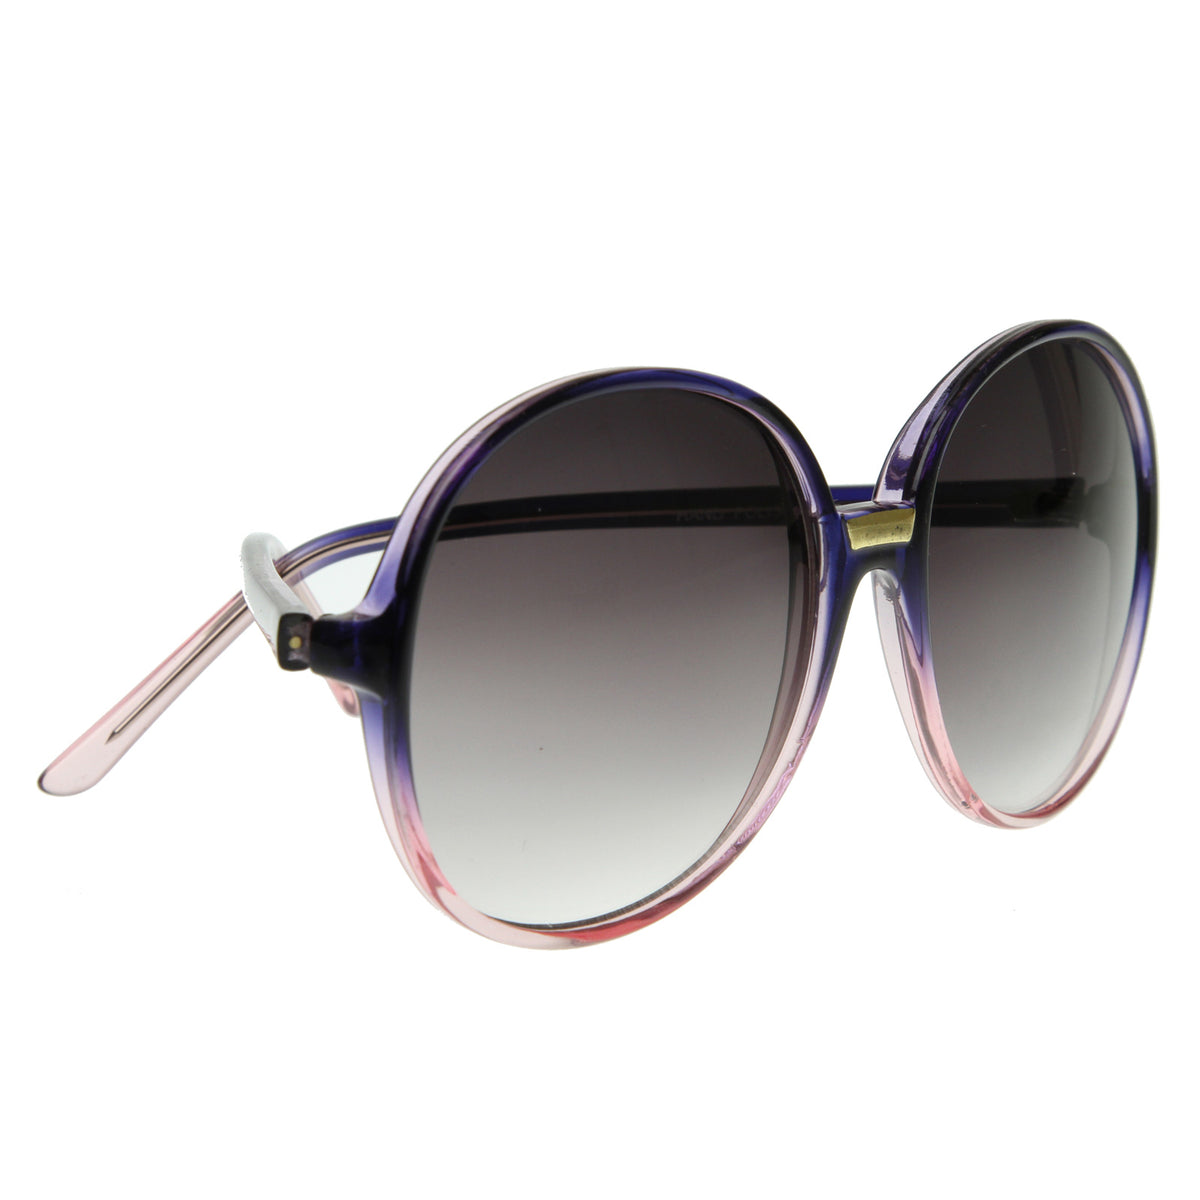 Designer Inspired Oversized Round Circle Fashion Sunglasses - sunglass.la